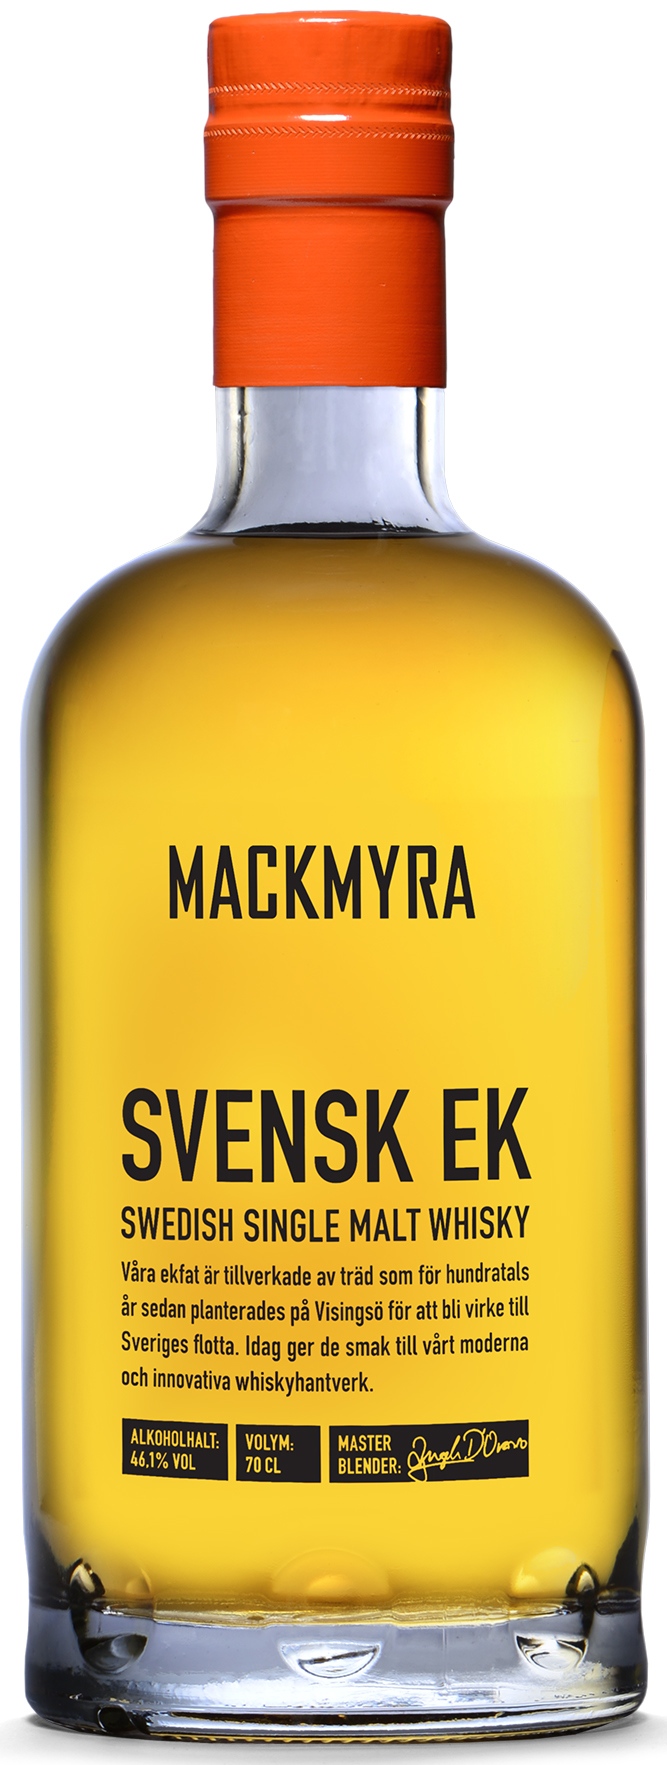 Turerna kring Mackmyras "Svensk ek"